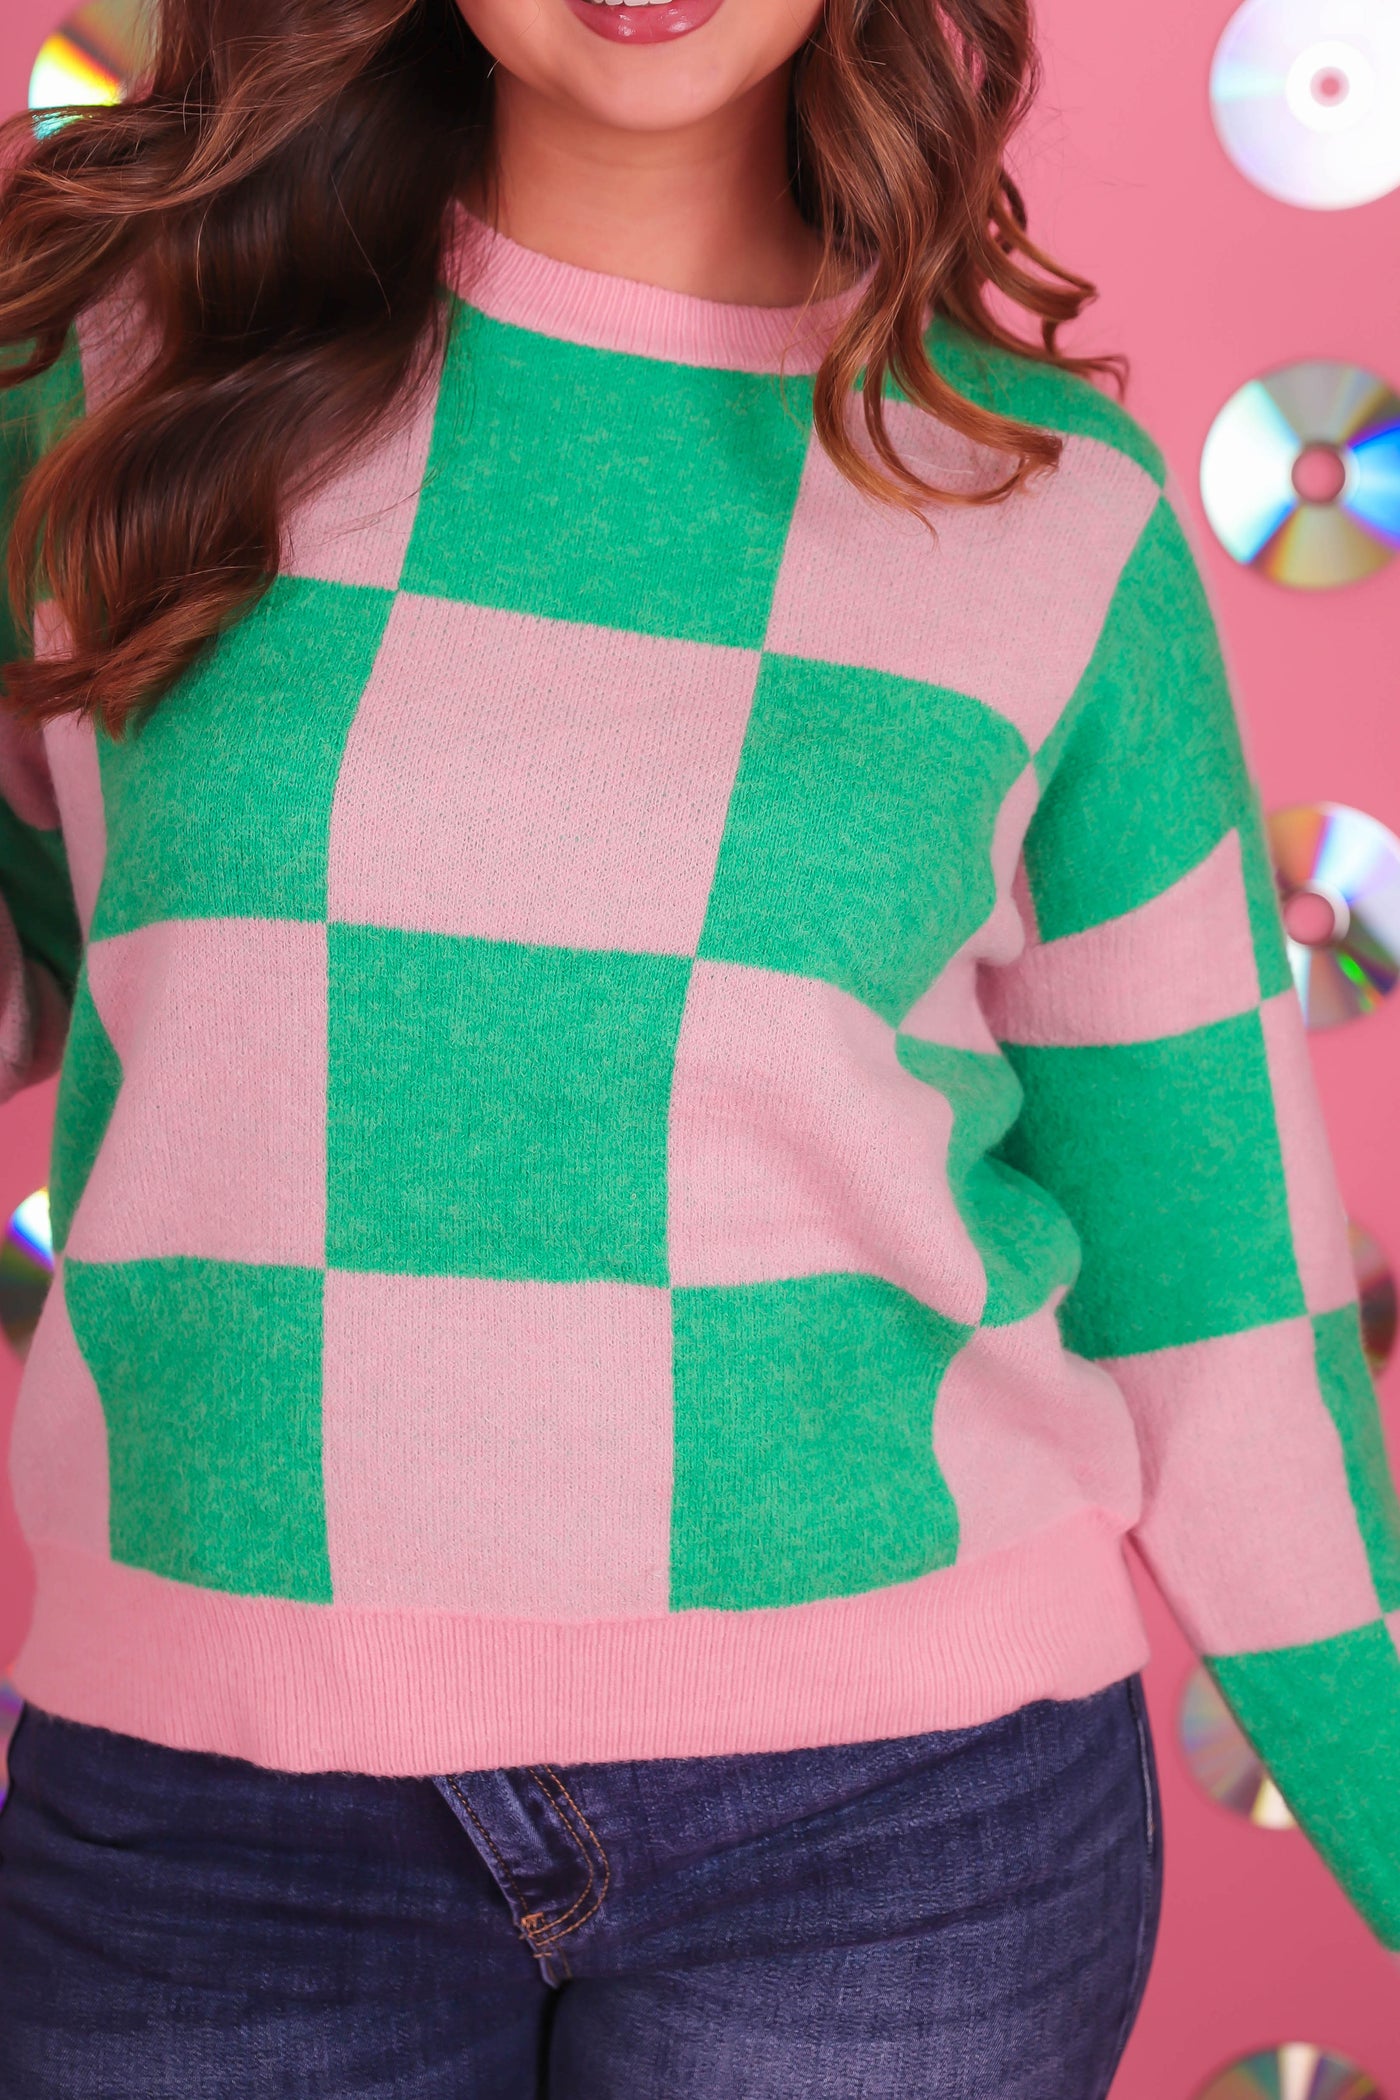 Women's Fun Pink and Green Sweater- Women's Checkered Sweater- Main Strip Sweater